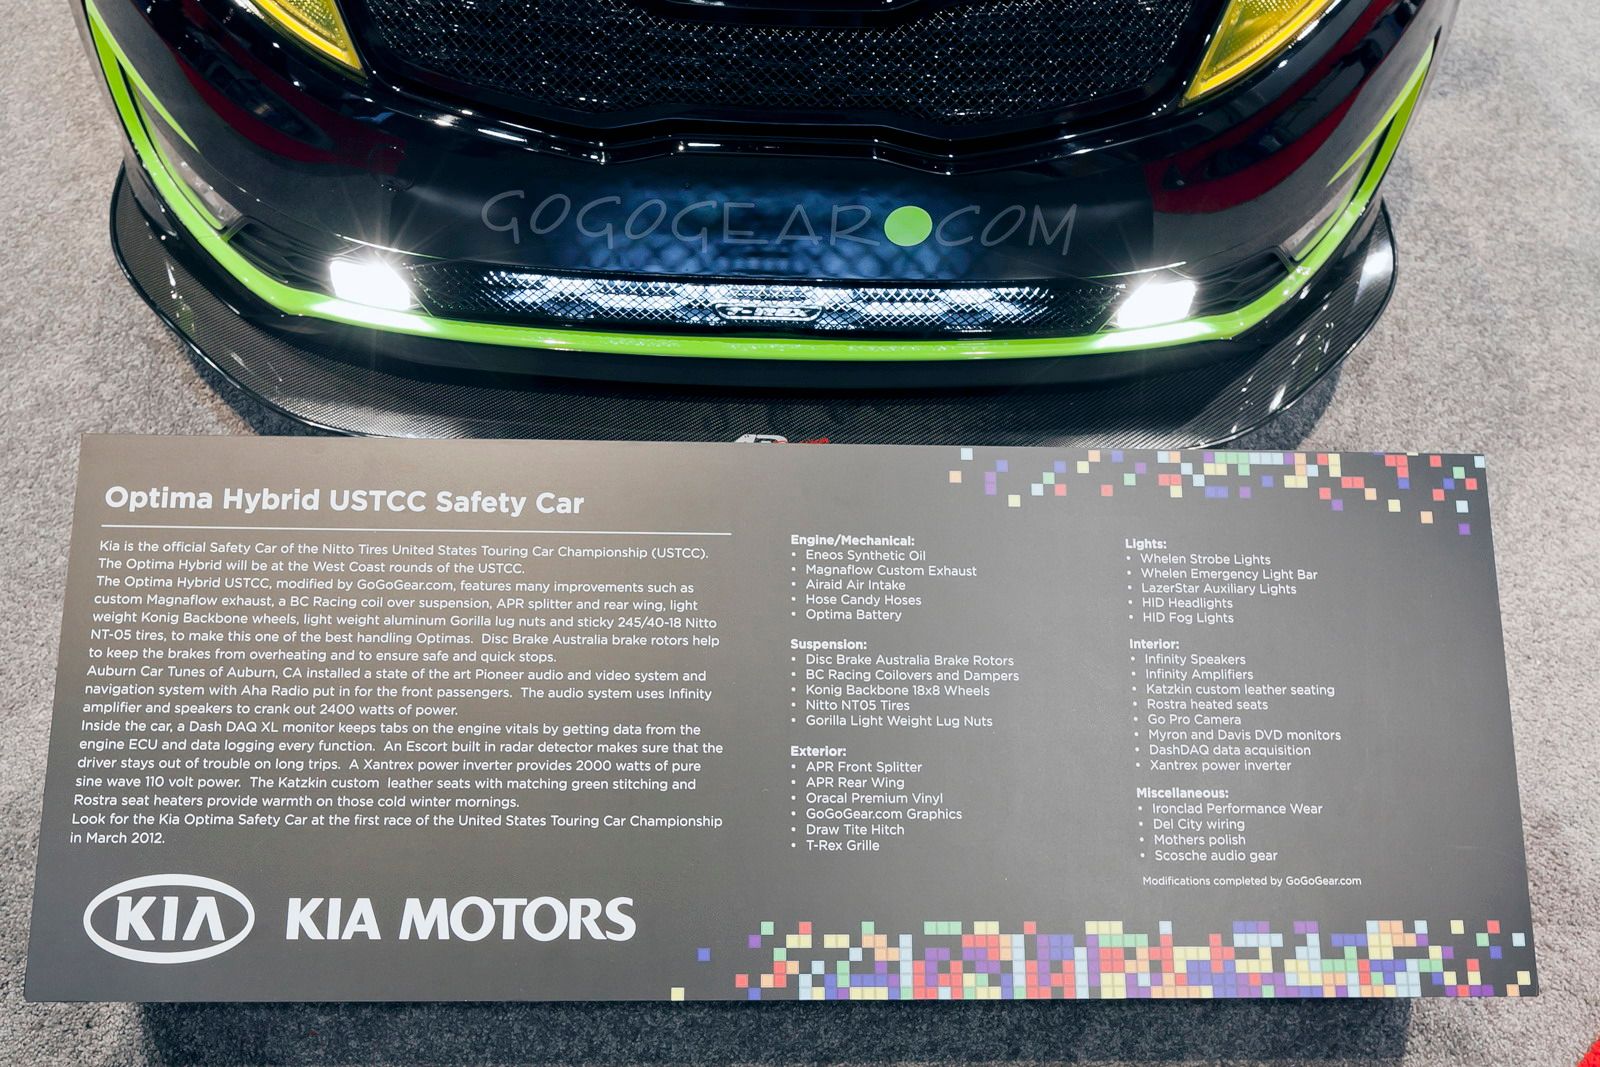 2012 Kia Optima Hybrid USTCC Pace Car